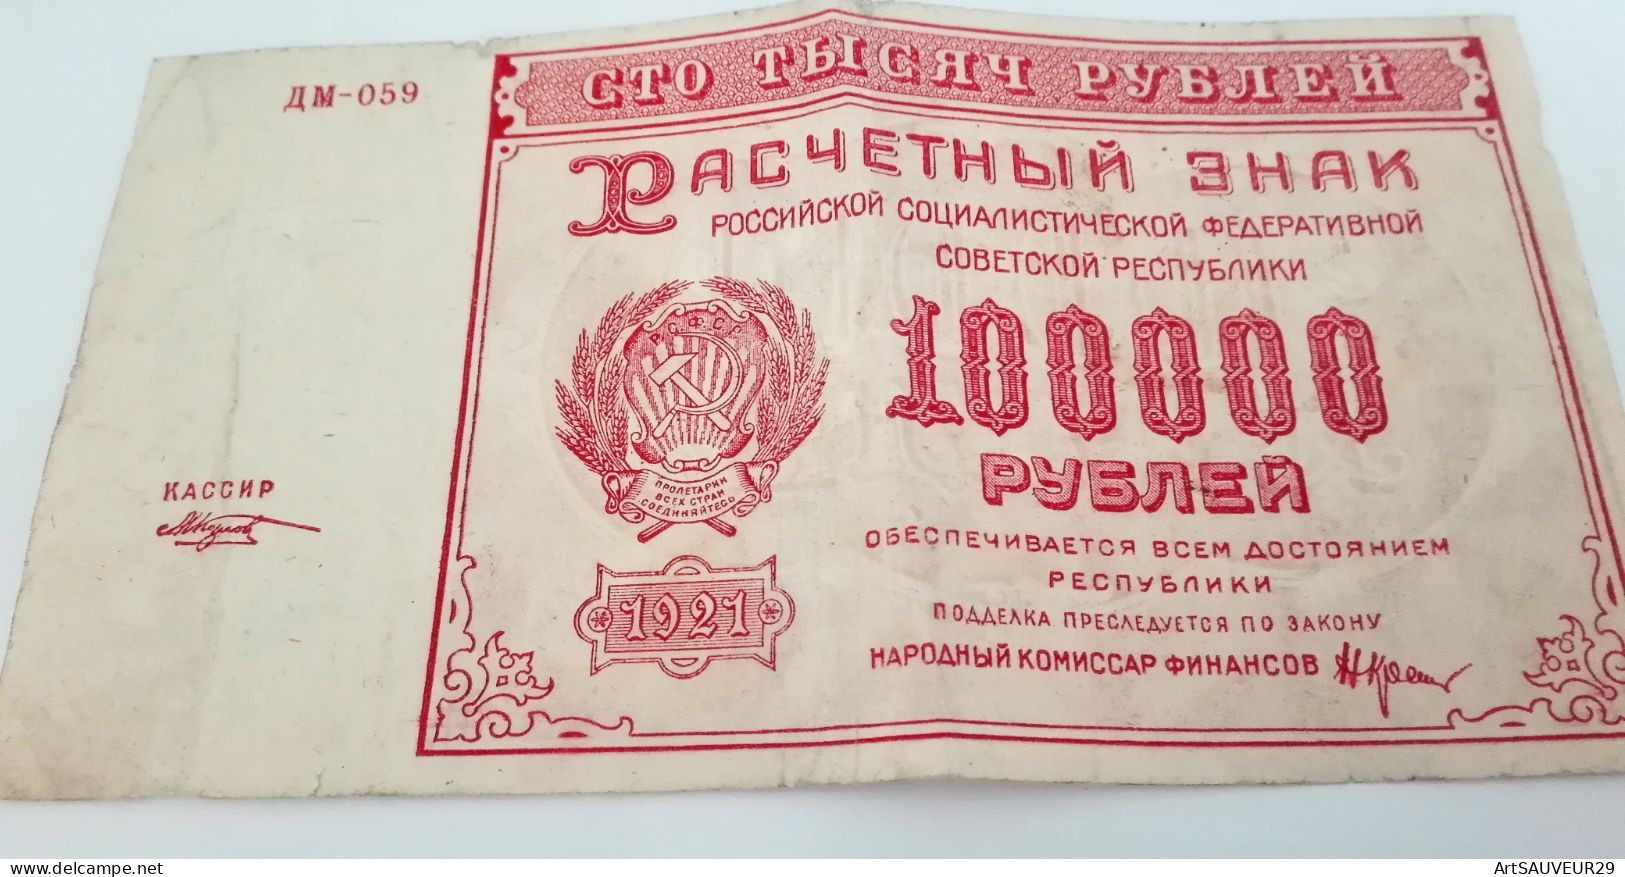 BILLET RUSSIE - 100.000 ROUBLES 1921 - Autres - Europe